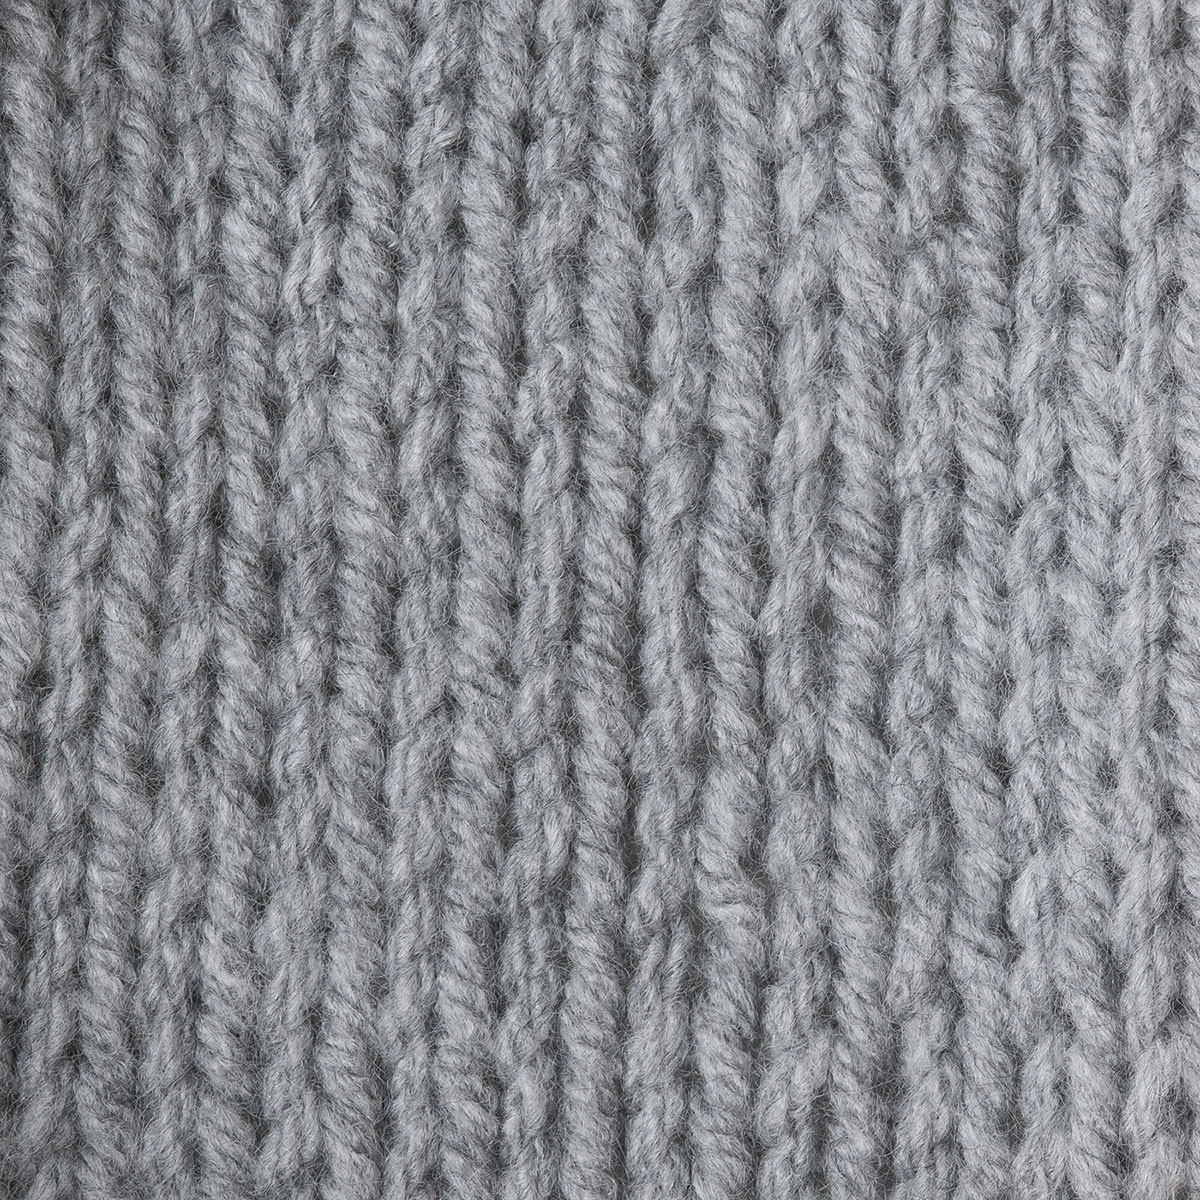 Caron One Pound Acrylic Yarn - 1 lb, 4-Ply, Medium Grey Mix